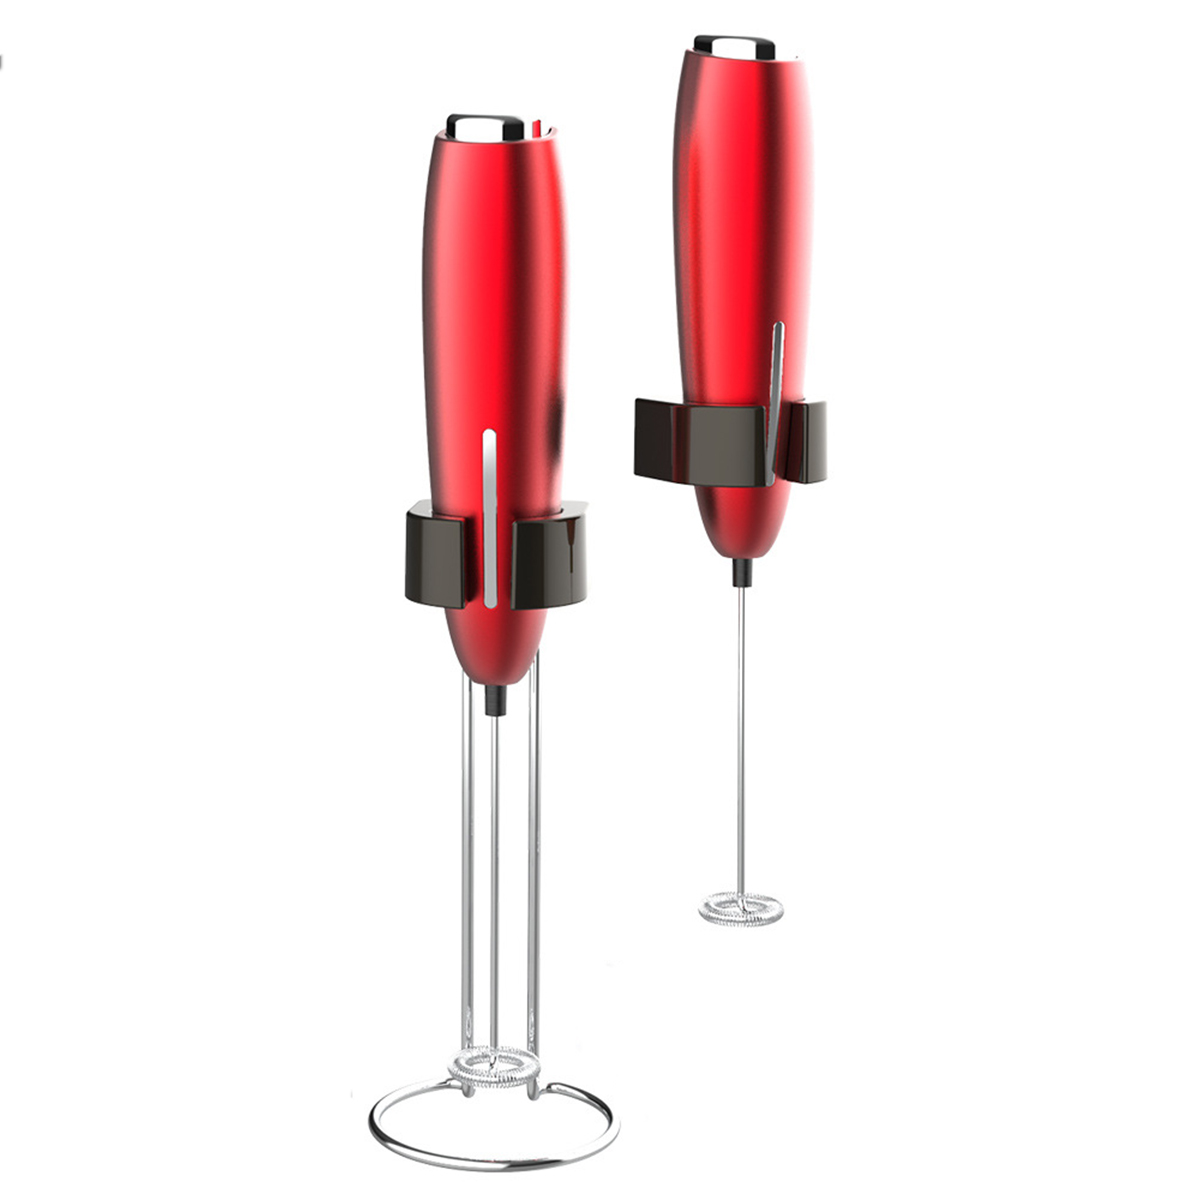 FEI Kabelloser elektrischer Milchaufschäumer und Rot – 304 (3 Stabmixer Edelstahl Mixen schnelles Volt) Rührgerät